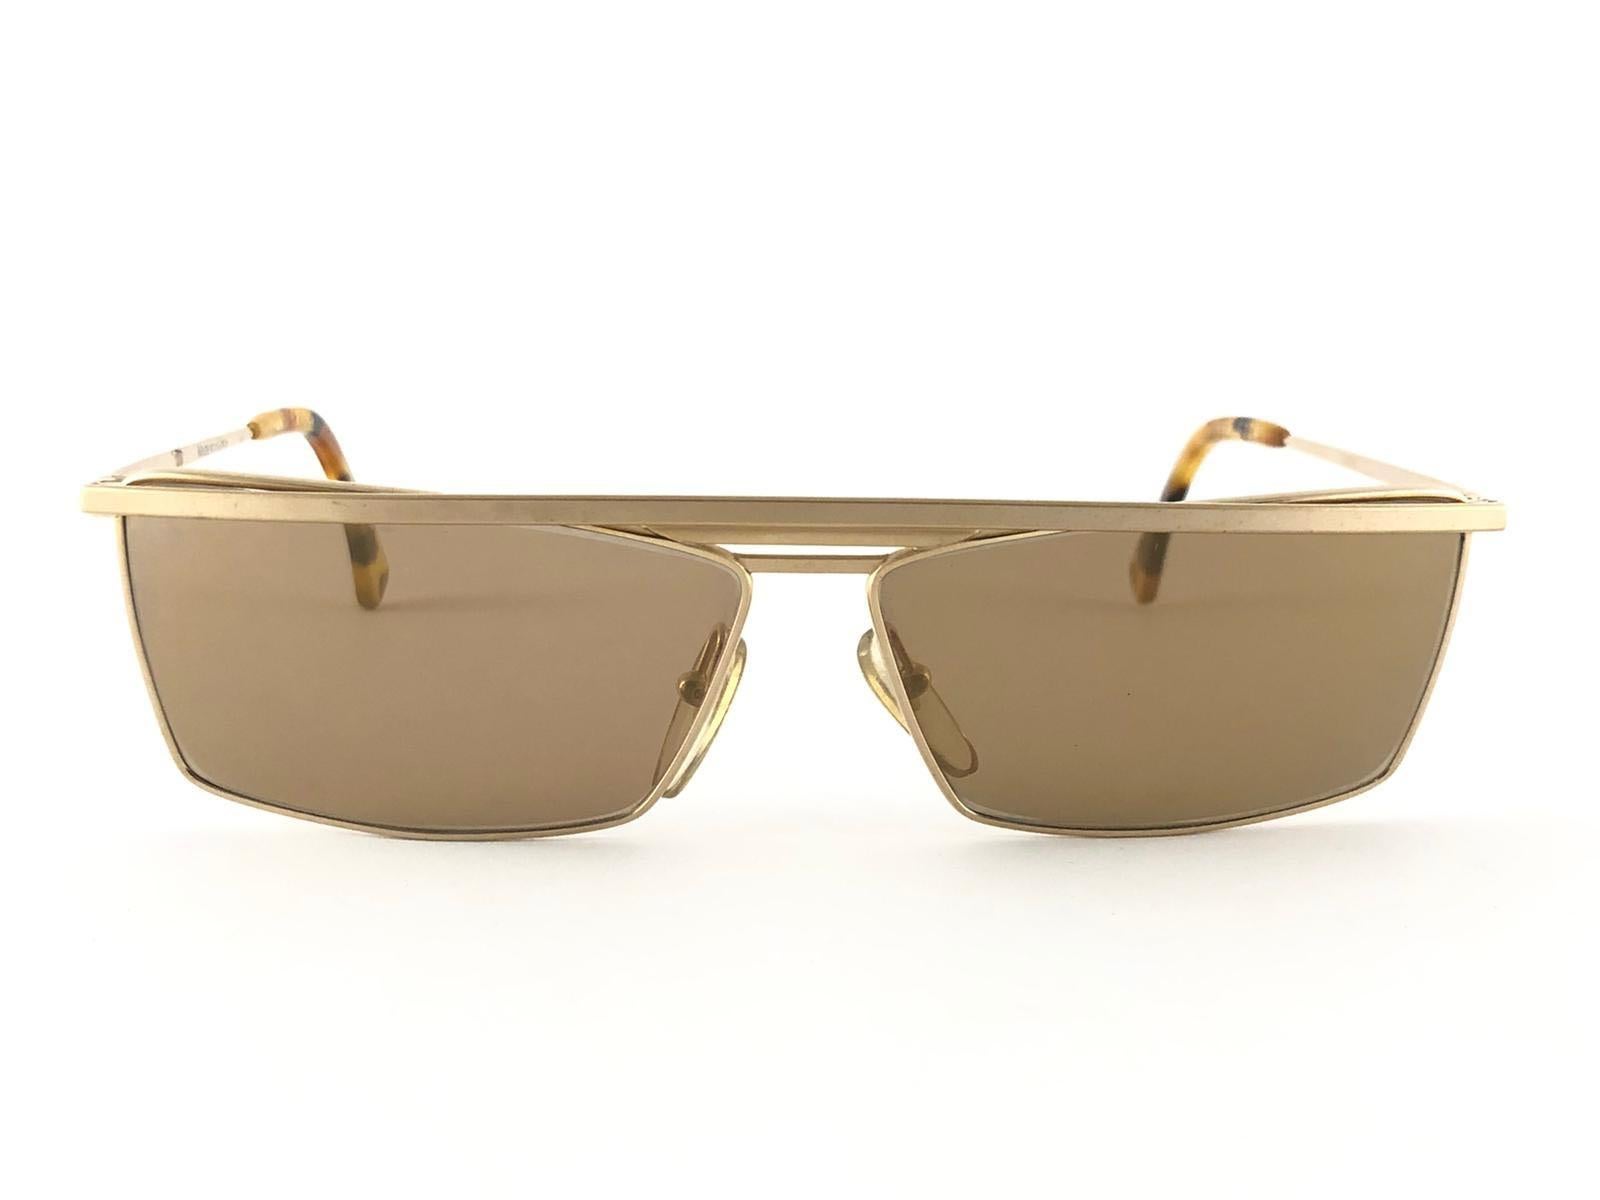 New Vintage Rare Alain Mikli  663 Gold Mask Sunglasses 1990 For Sale 1